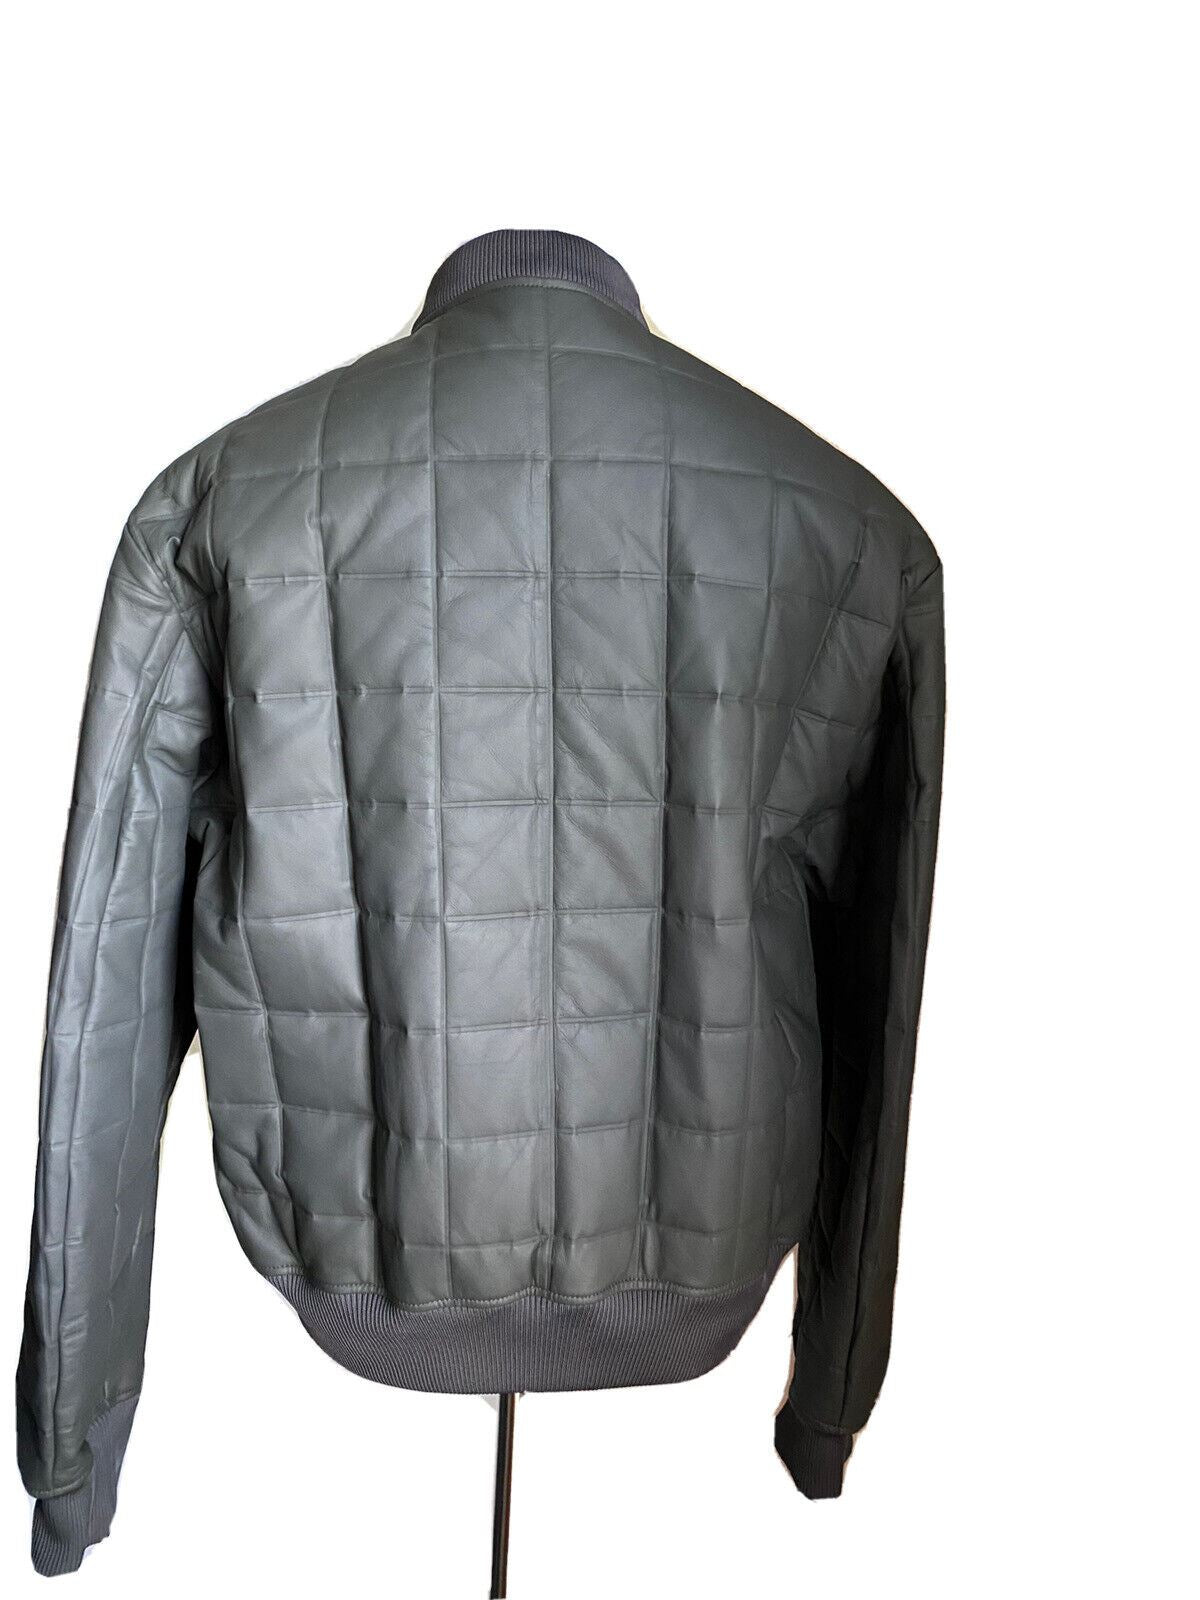 New $6700 Bottega Veneta Men Light Leather Jacket Coat 44 US/54 Eu